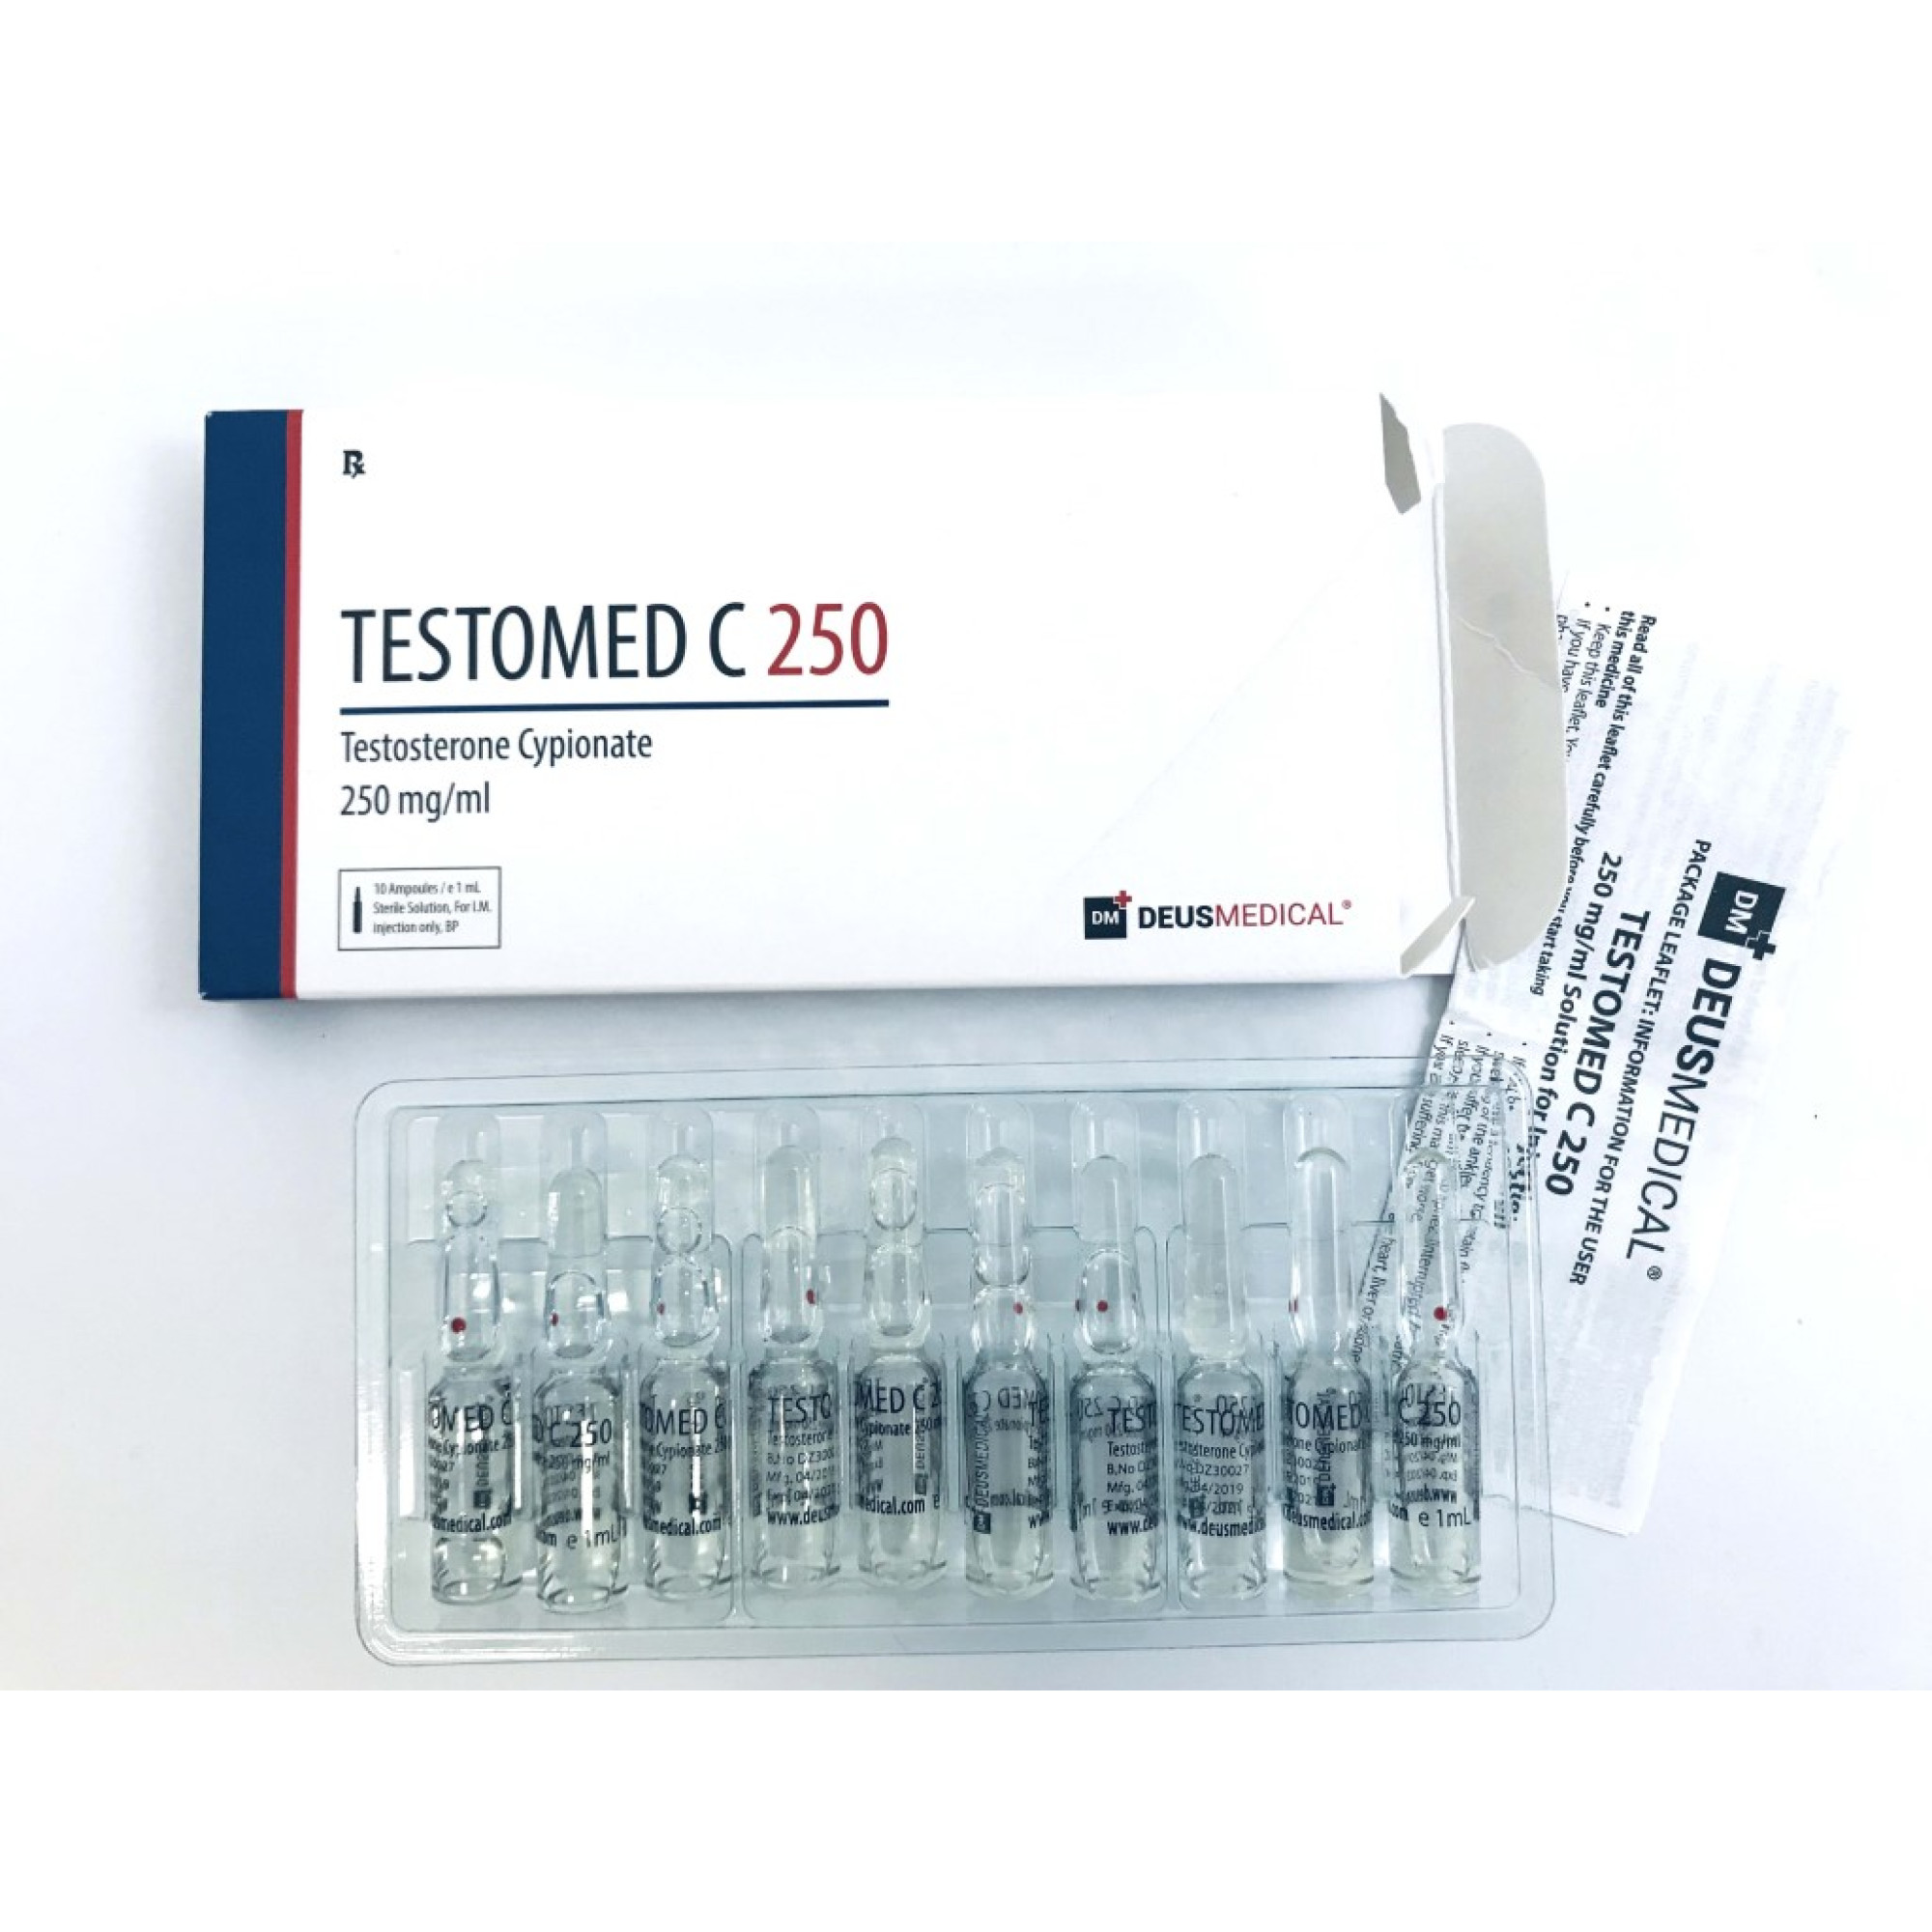 TESTOMED C 250 (Testosterone Cypionate), DEUS MEDICAL, BUY STEROIDS ONLINE - www.DEUSPOWER.com